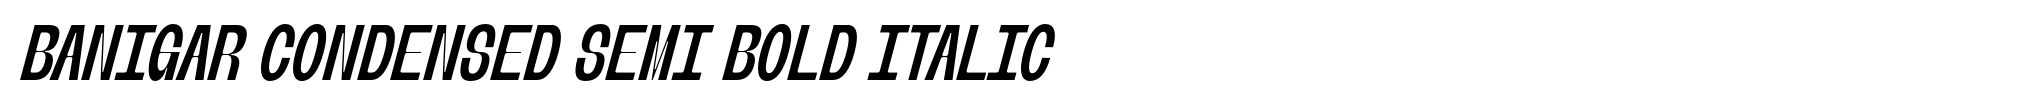 Banigar Condensed Semi Bold Italic image